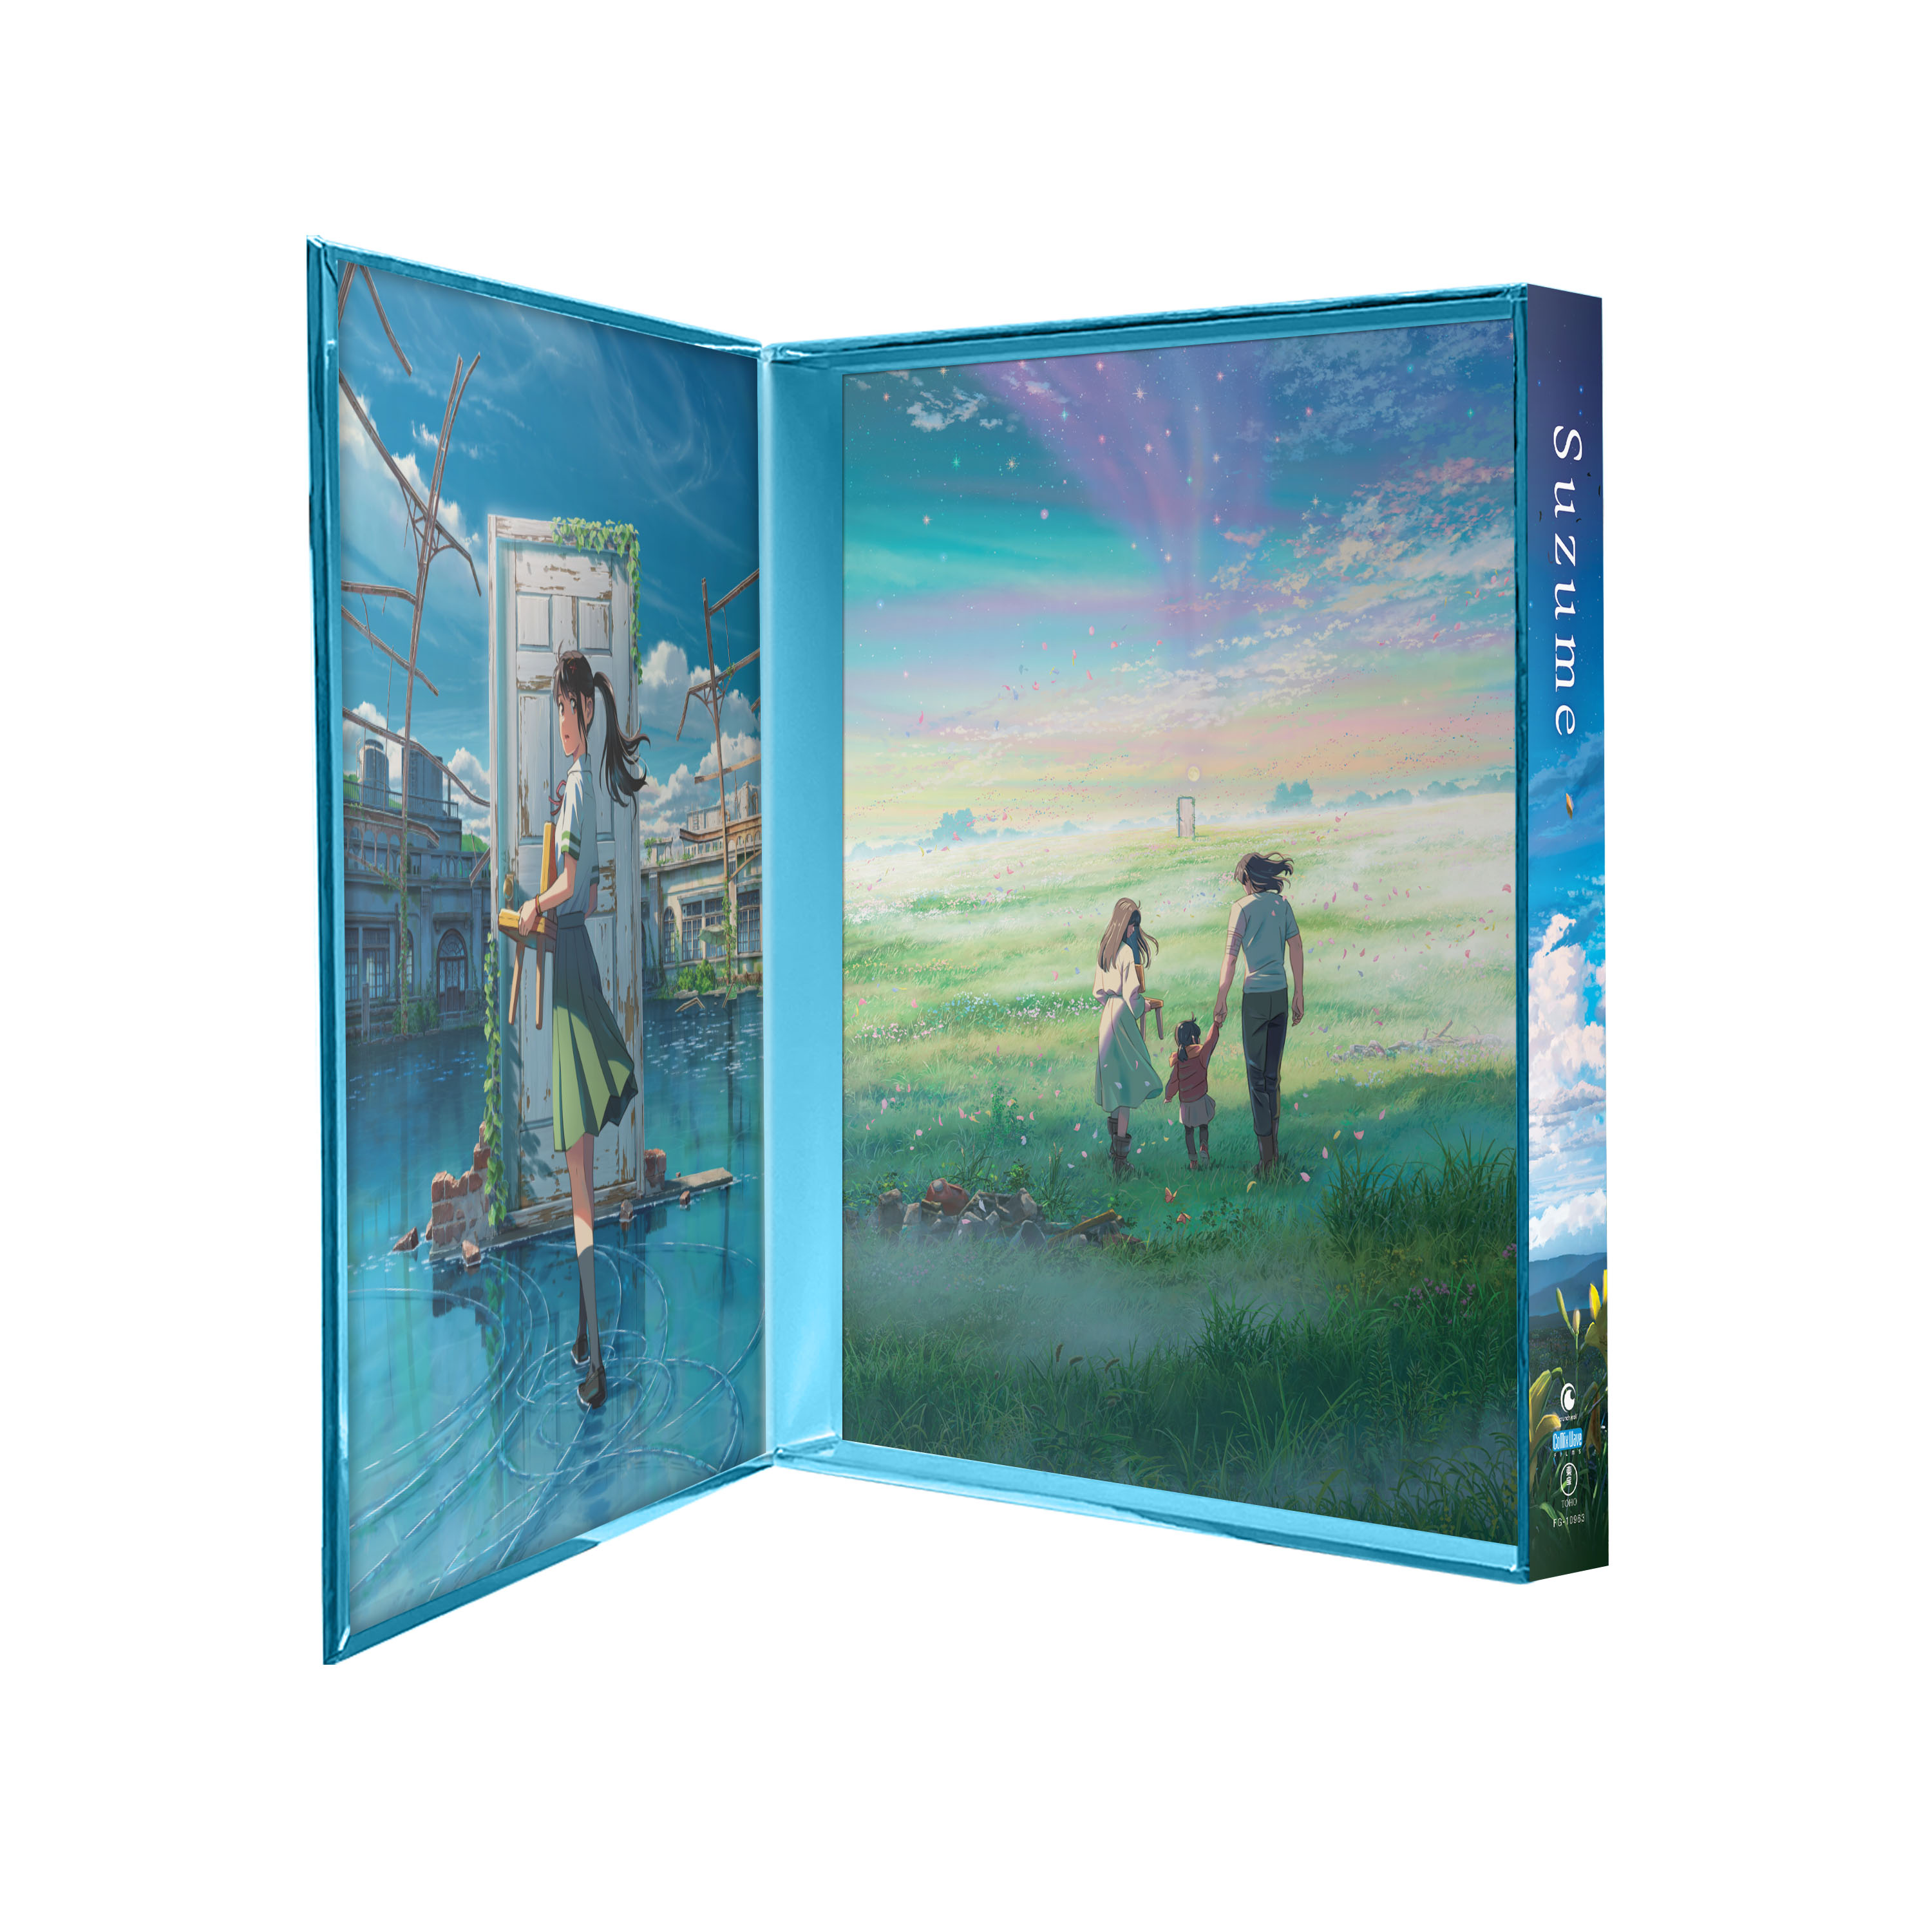 Suzume - Movie - Blu-ray + DVD - Limited Edition